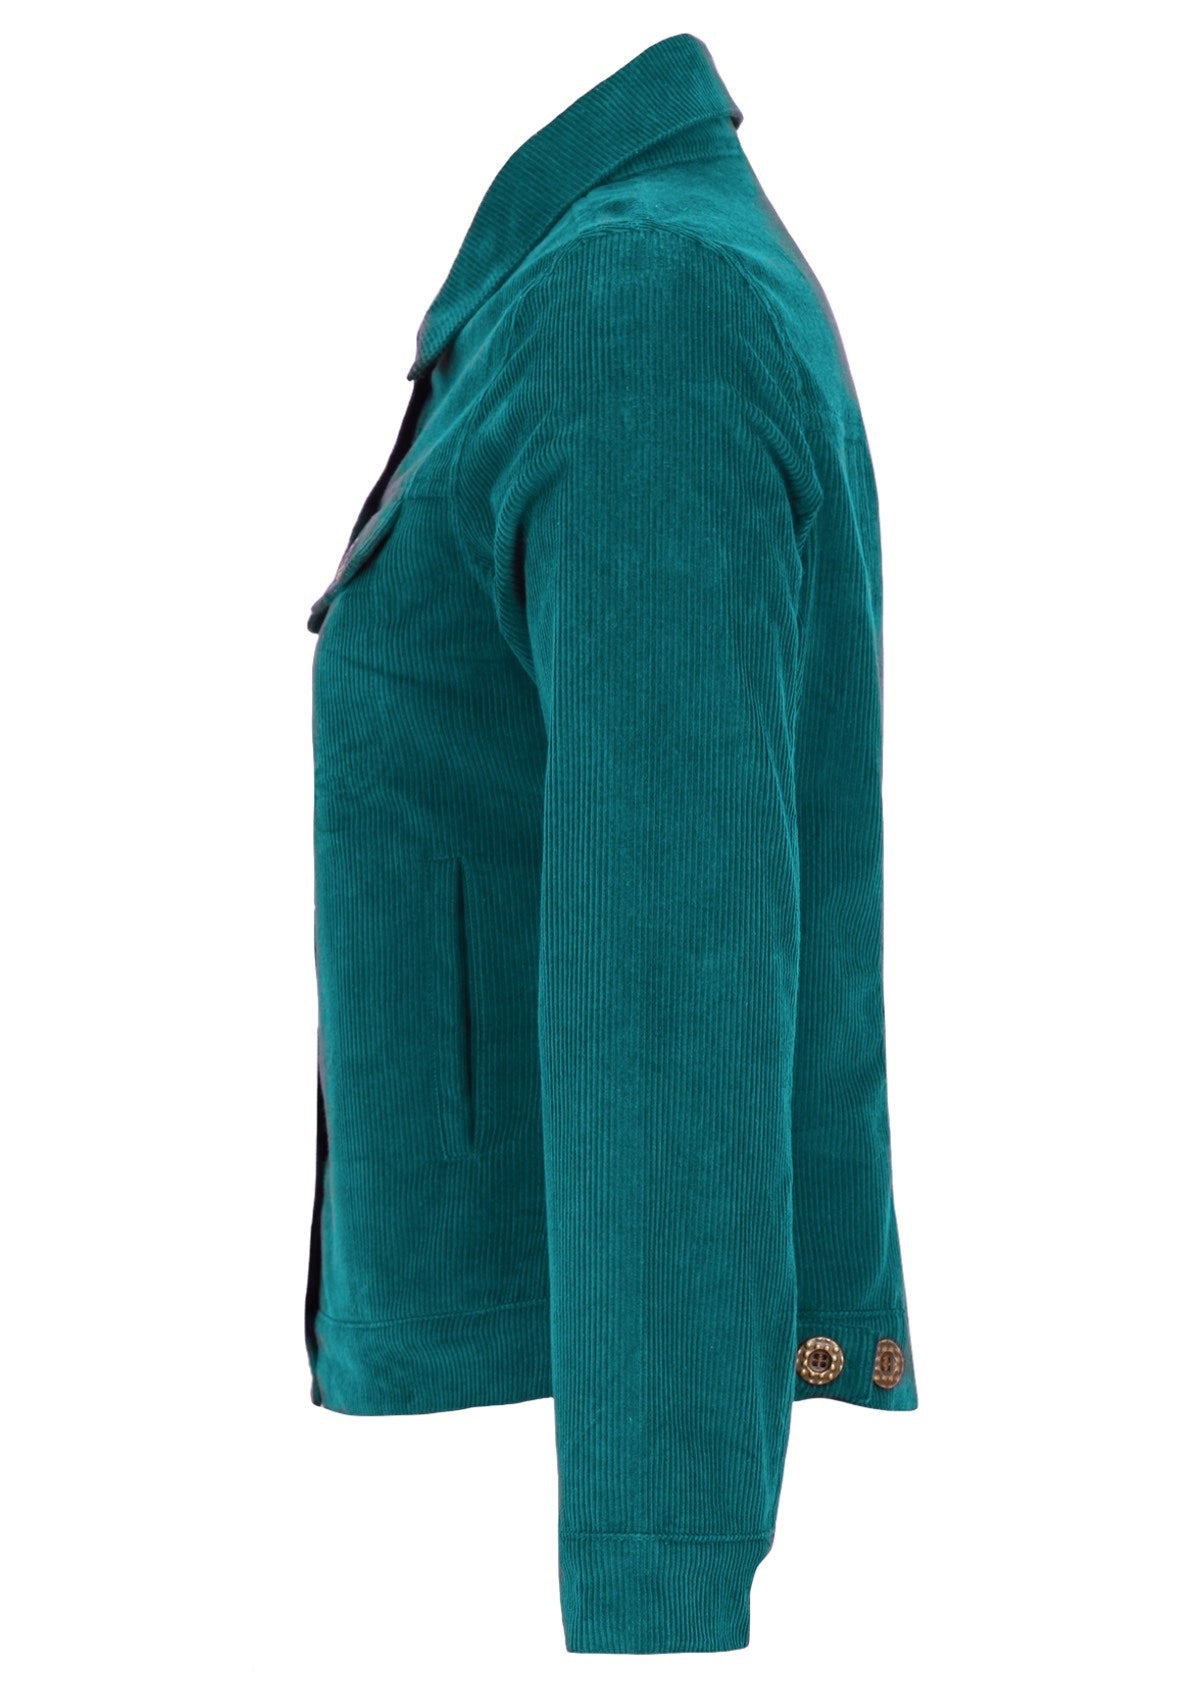 Deep teal corduroy jacket has long sleeves and pockets. 